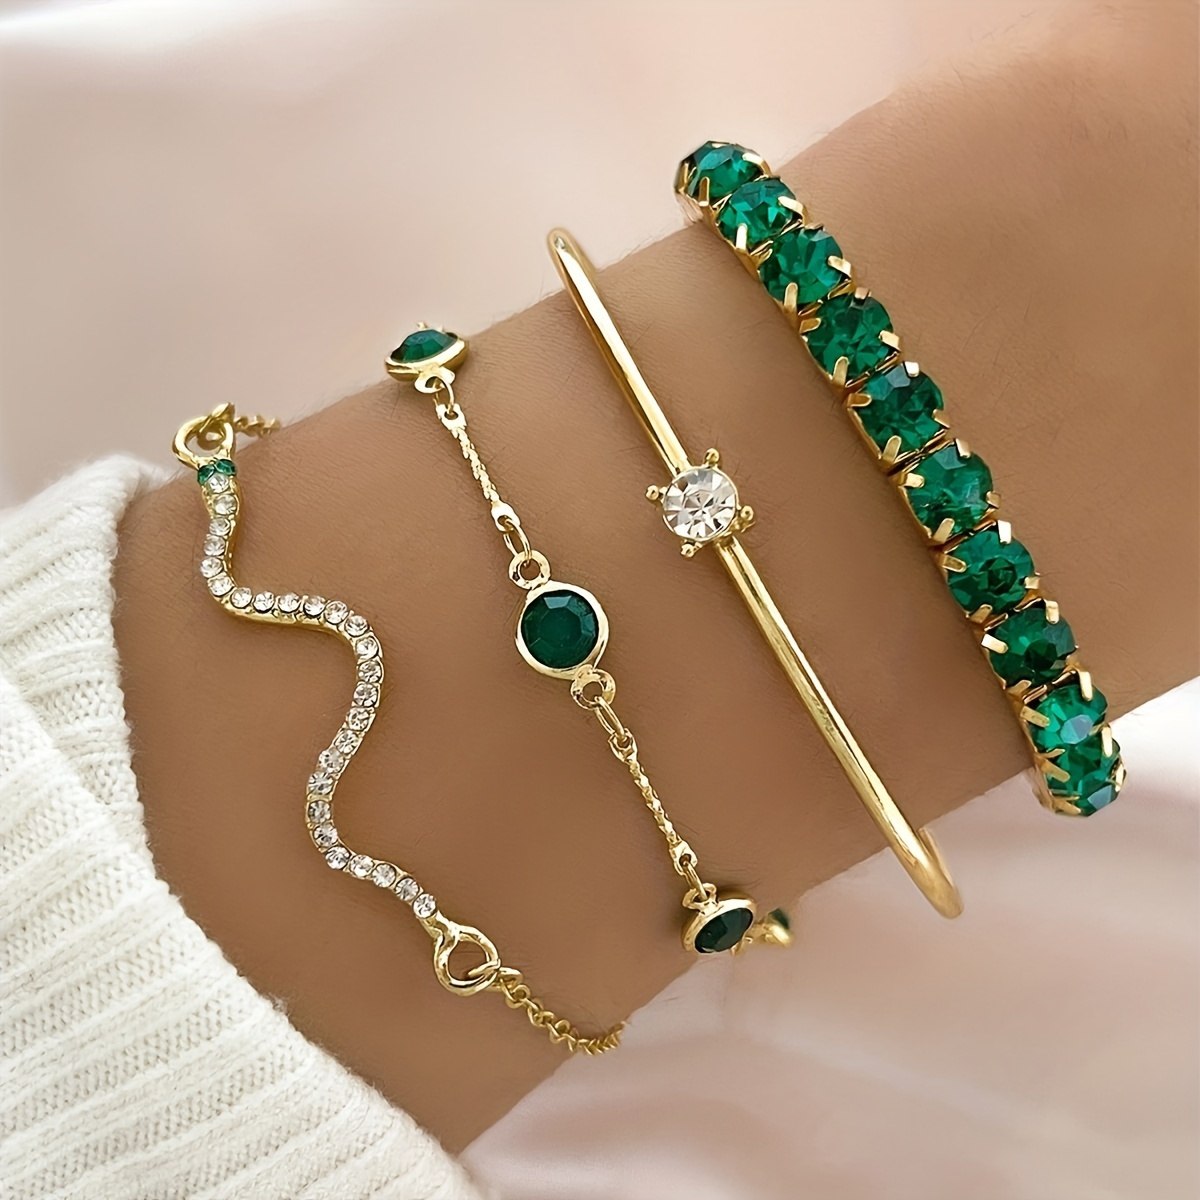 

Retro & Elegant Style, 4pcs Green Shiny Iced Out Zircon Bangle Bracelet Set, Stackable Hand Jewelry Bracelet For Daily Wear